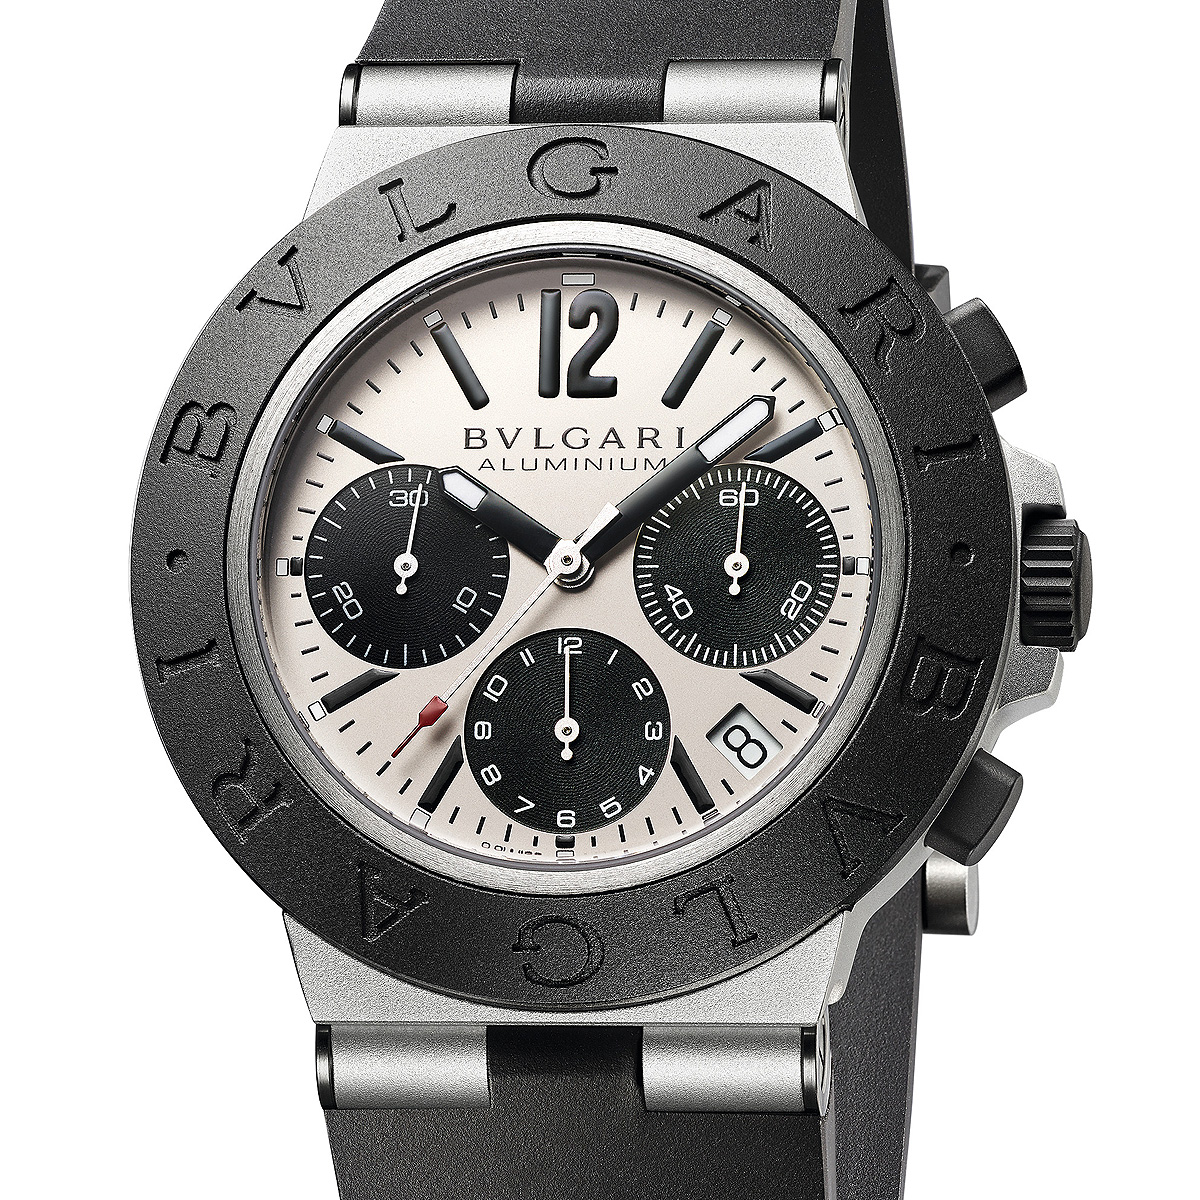 Bulgari Aluminium Watch Updates a 1990s Jet-Set Classic | WatchTime - USA's   Watch Magazine